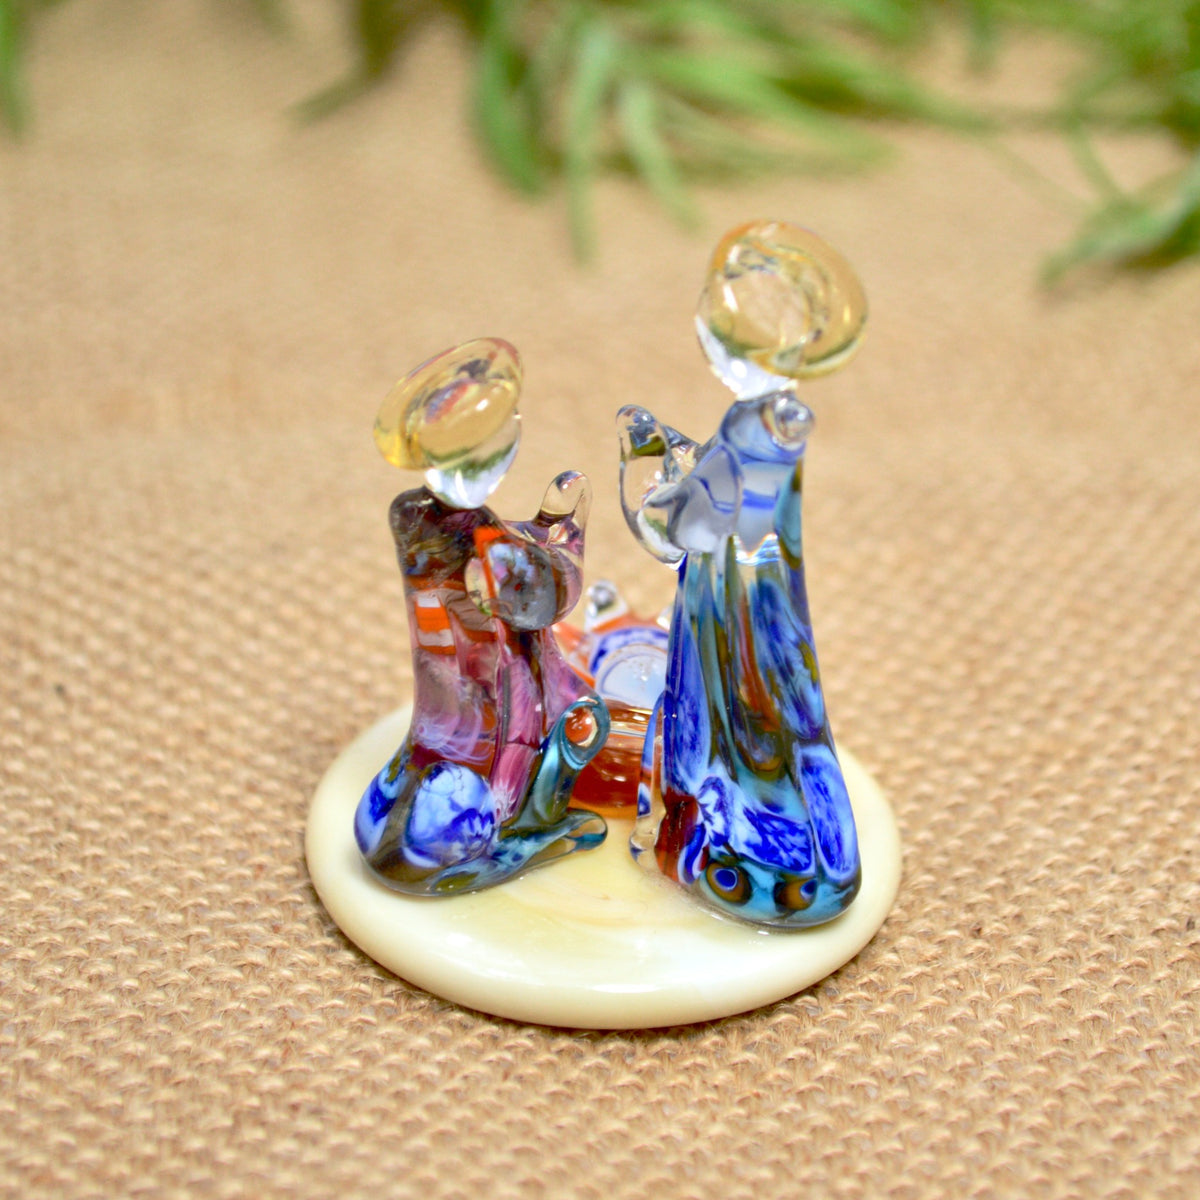 Murano Glass Nativity Scene, Made in Italy - My Italian Decor